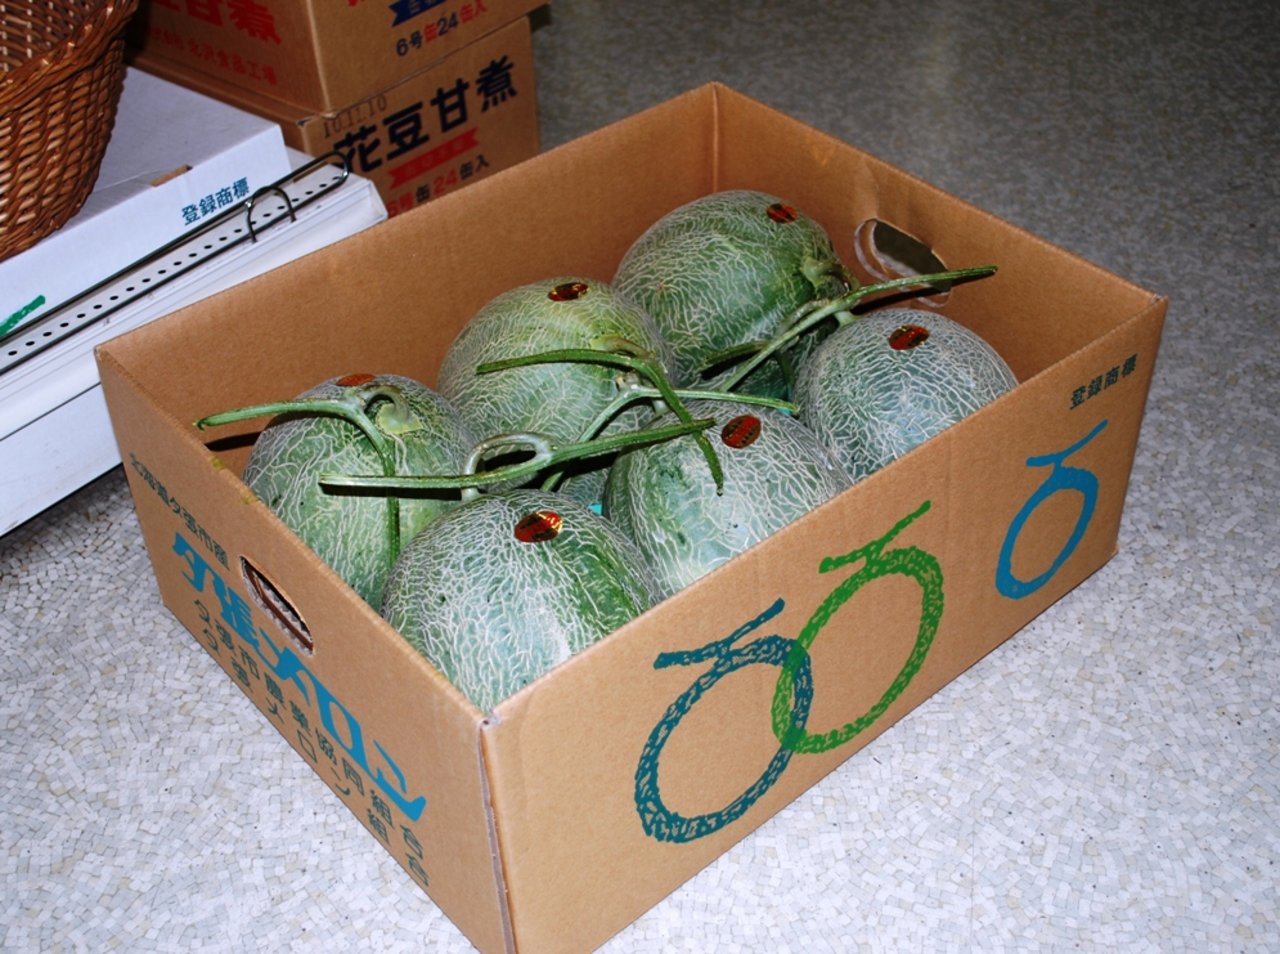 Drei Paar Yubari King Melonen für den Transport verpackt. (Bild Captain76)